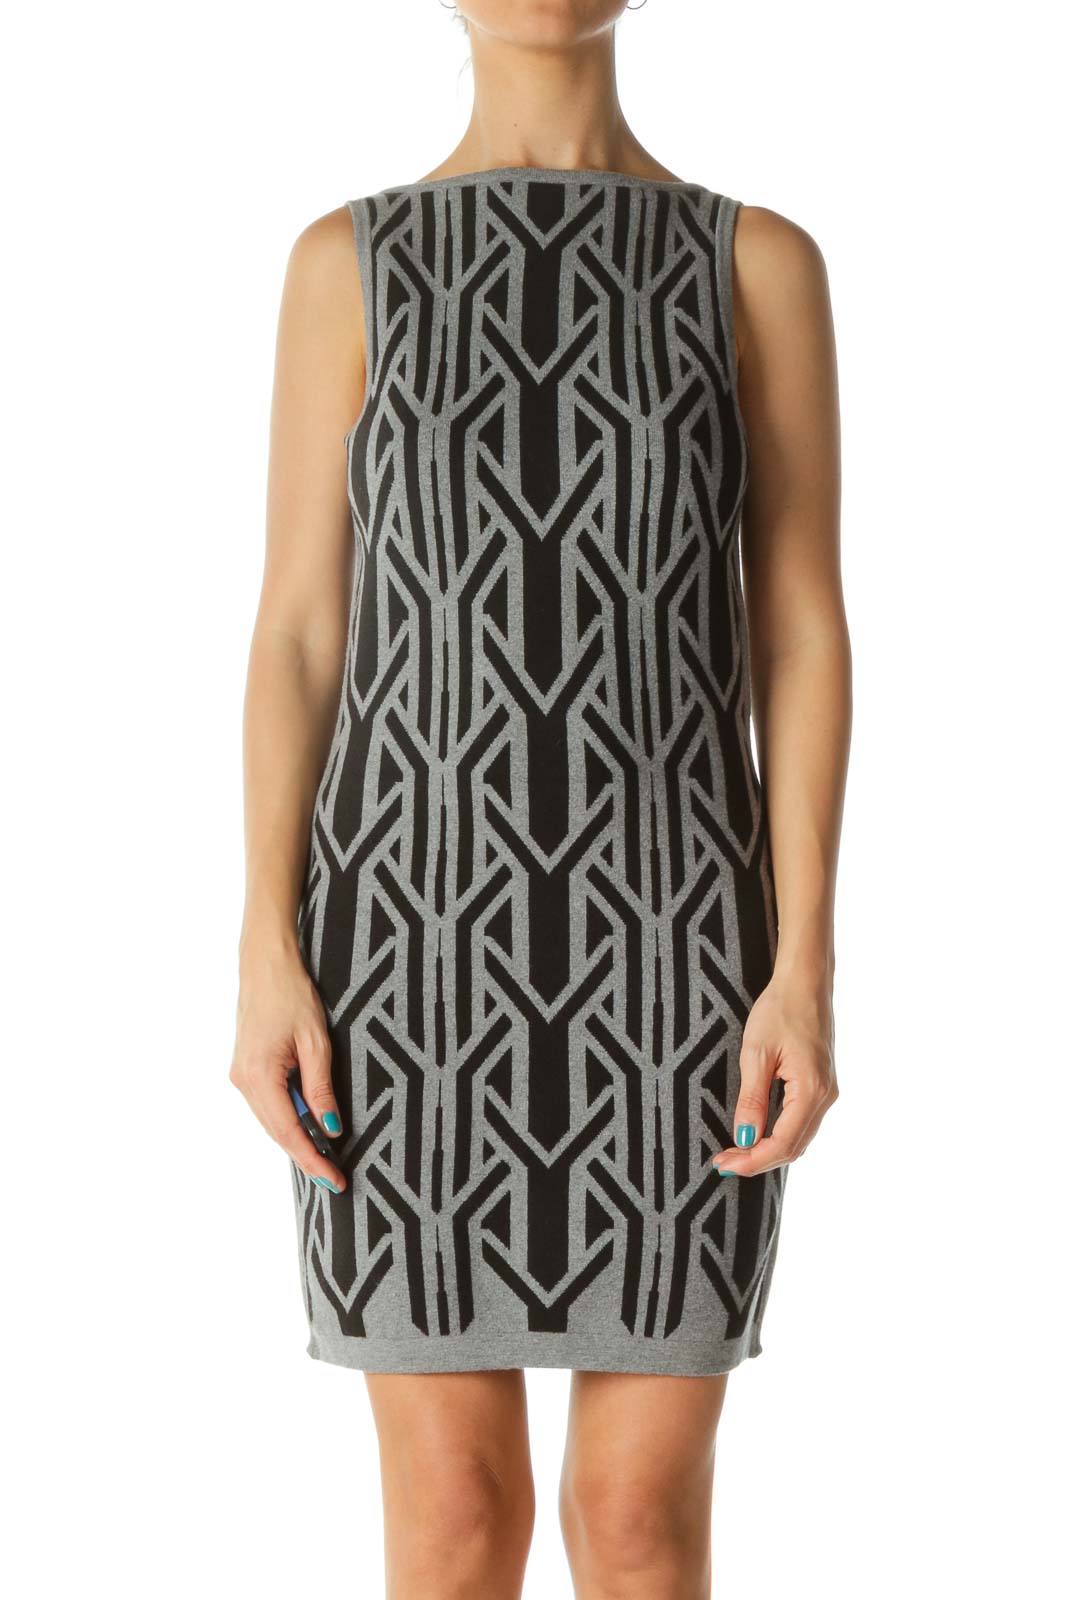 Black & Gray Tribal Print Sleeveless Knit Dress Front